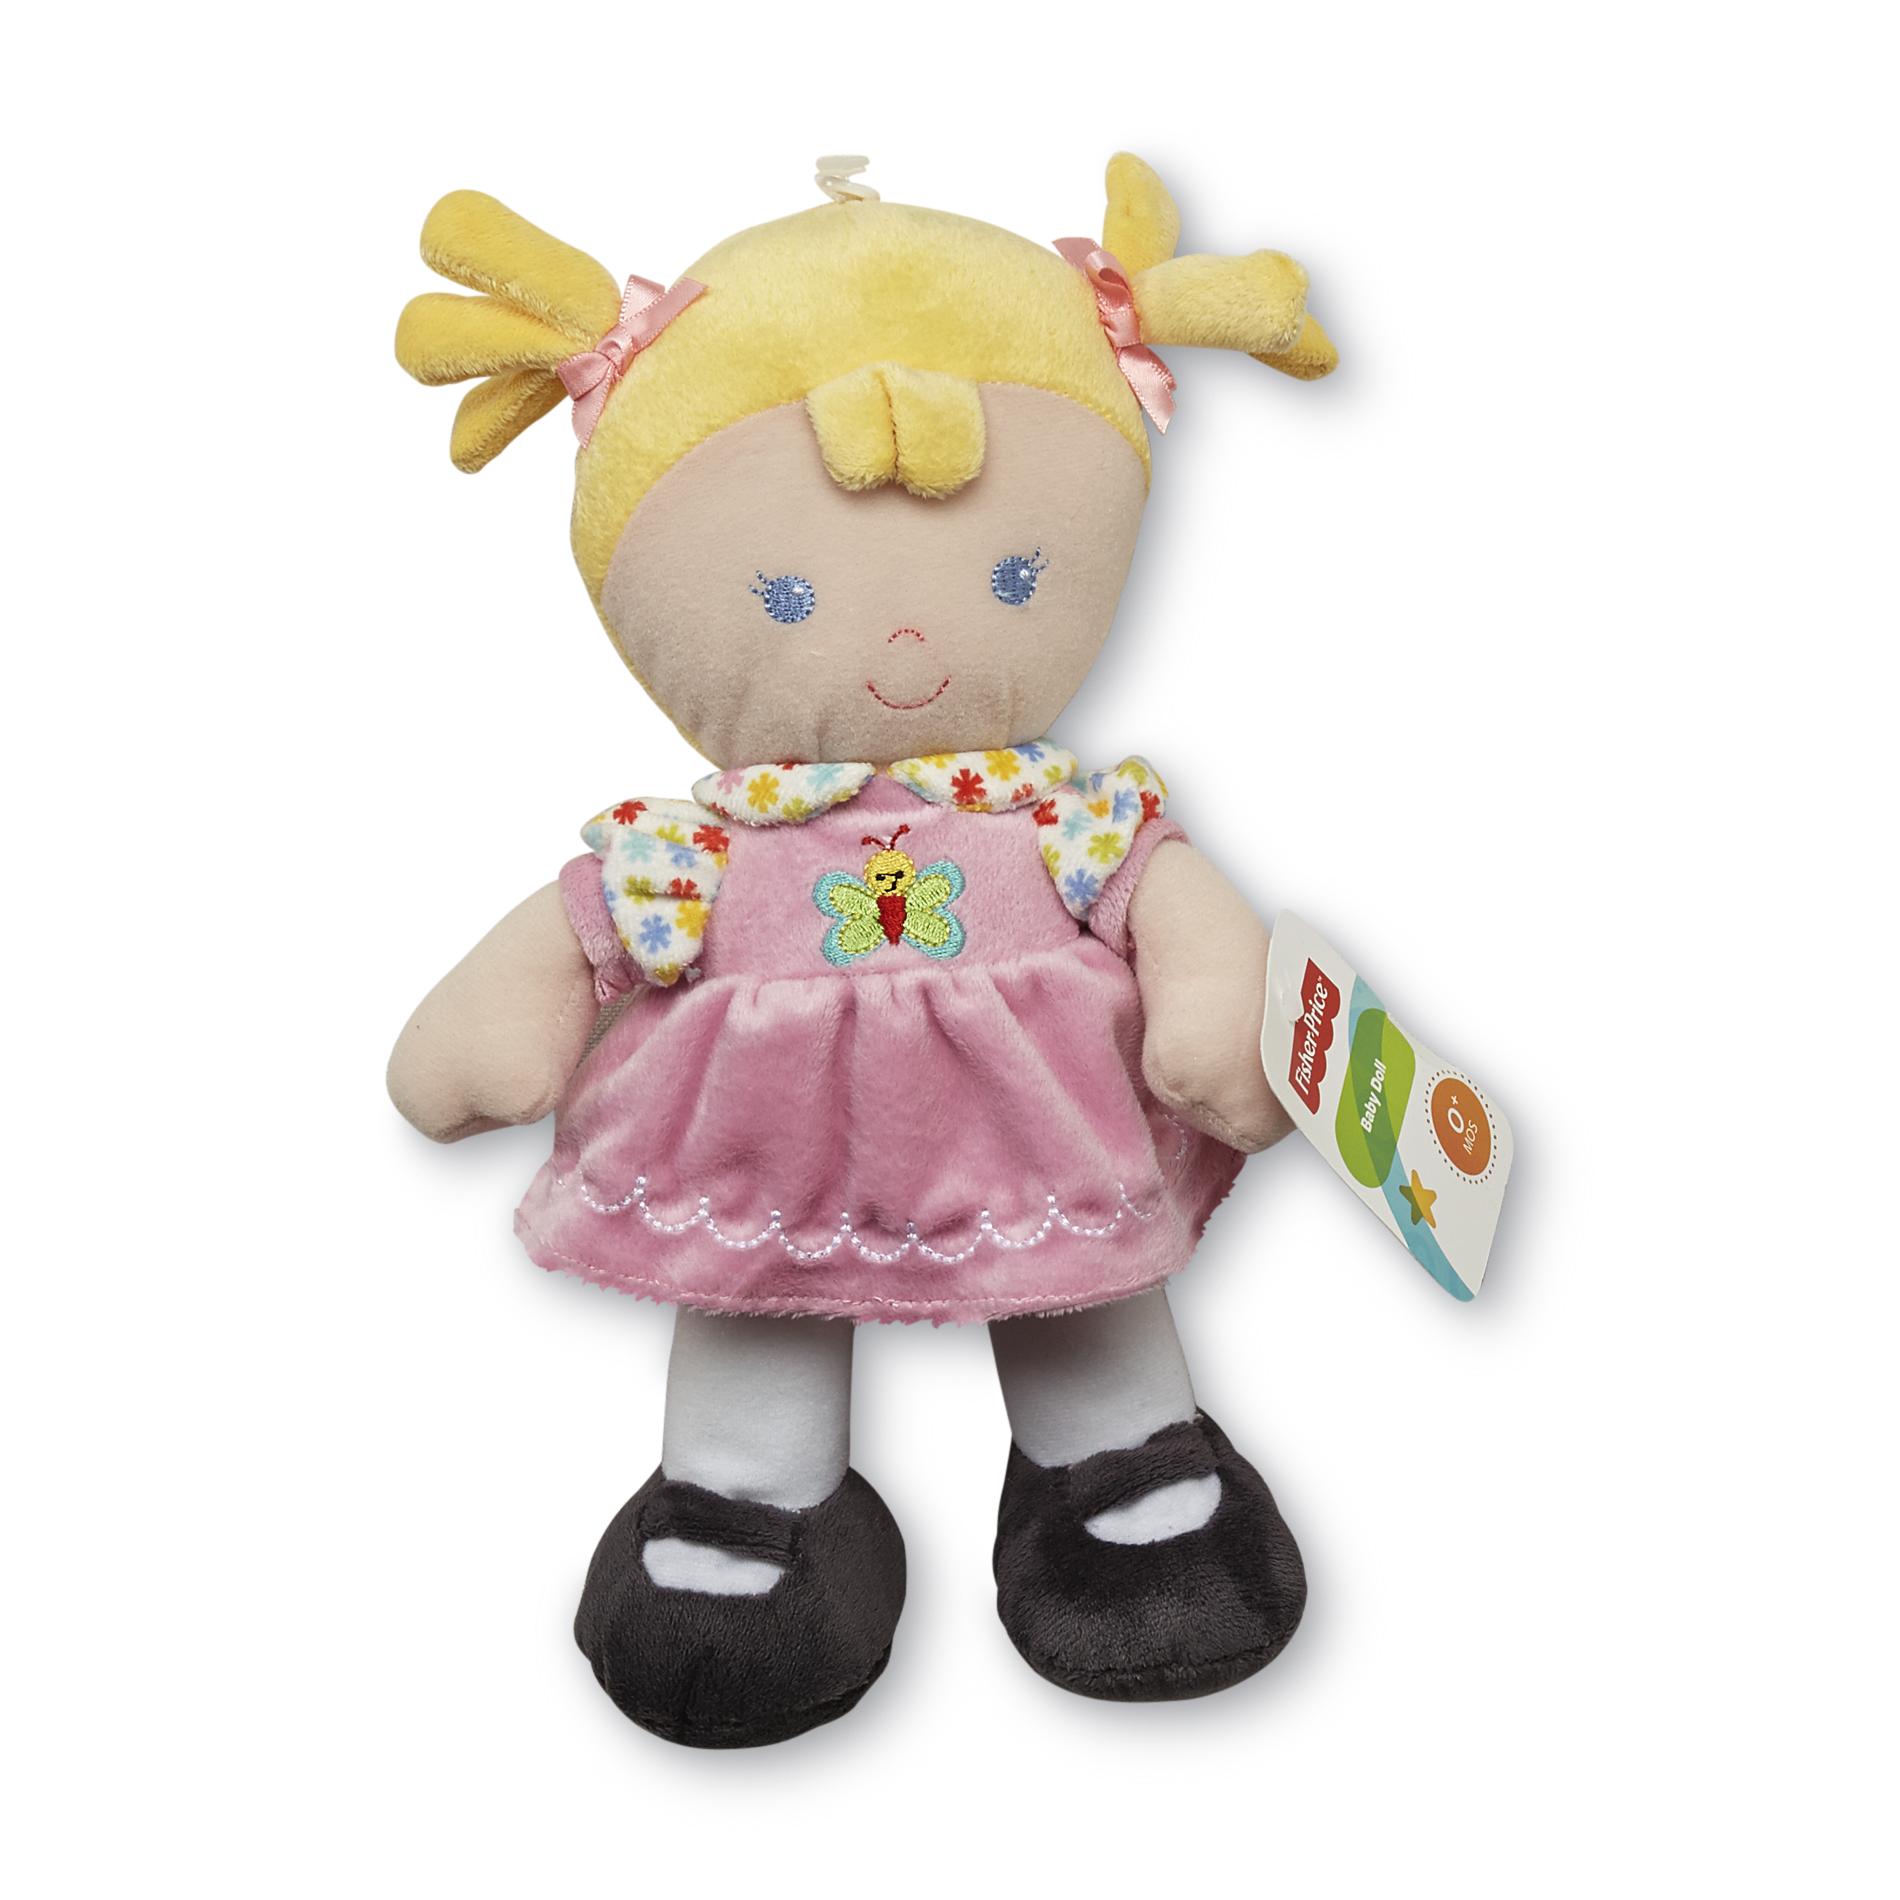 FisherPrice Infant Girl's Soft Baby Doll Toy